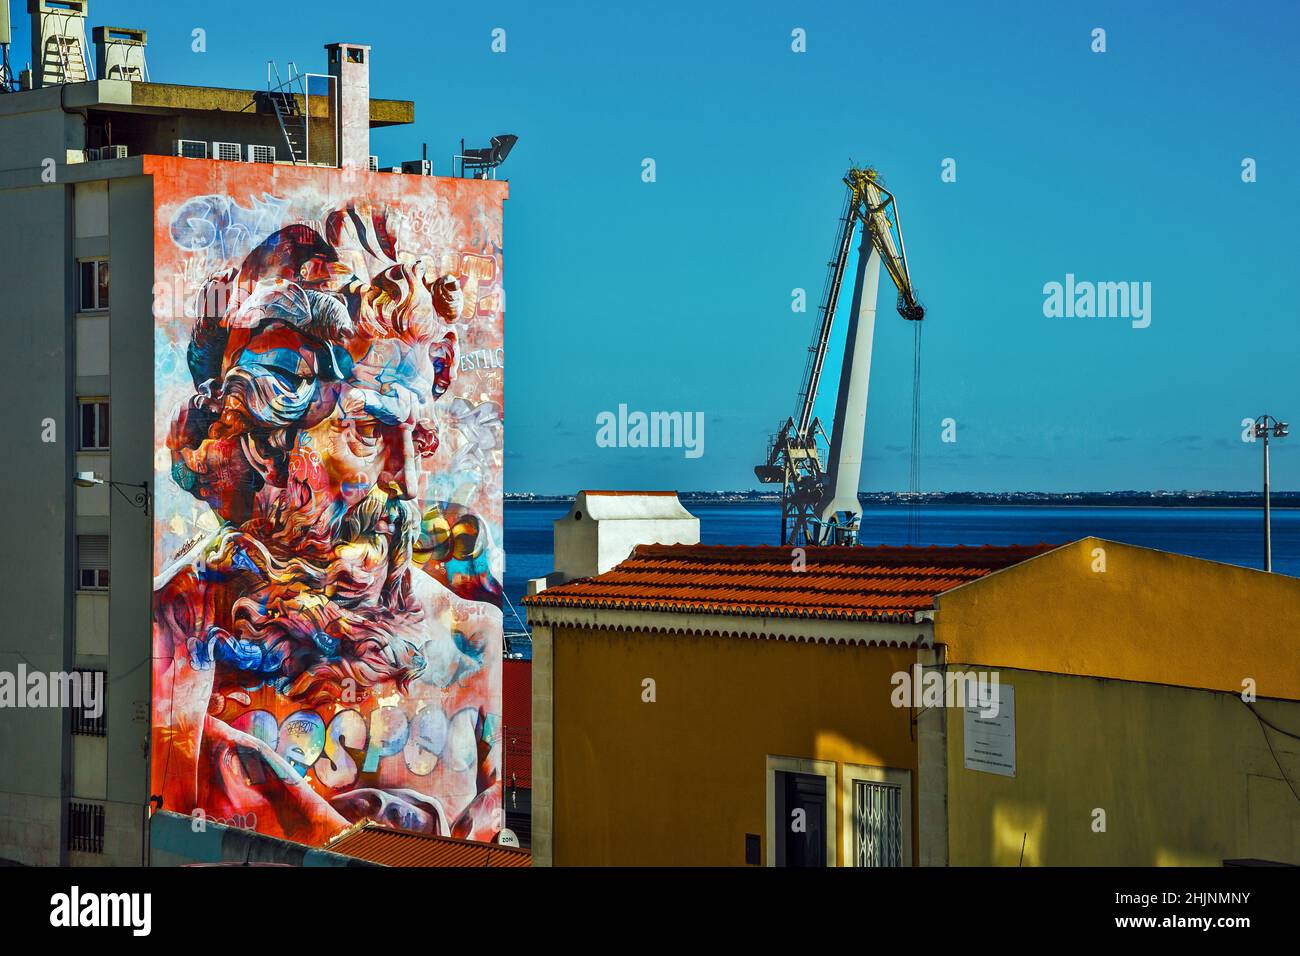 Famoso Graffiti e gru portuale sul fiume Tago, Lisboa. Lisbona, Portogallo Foto Stock